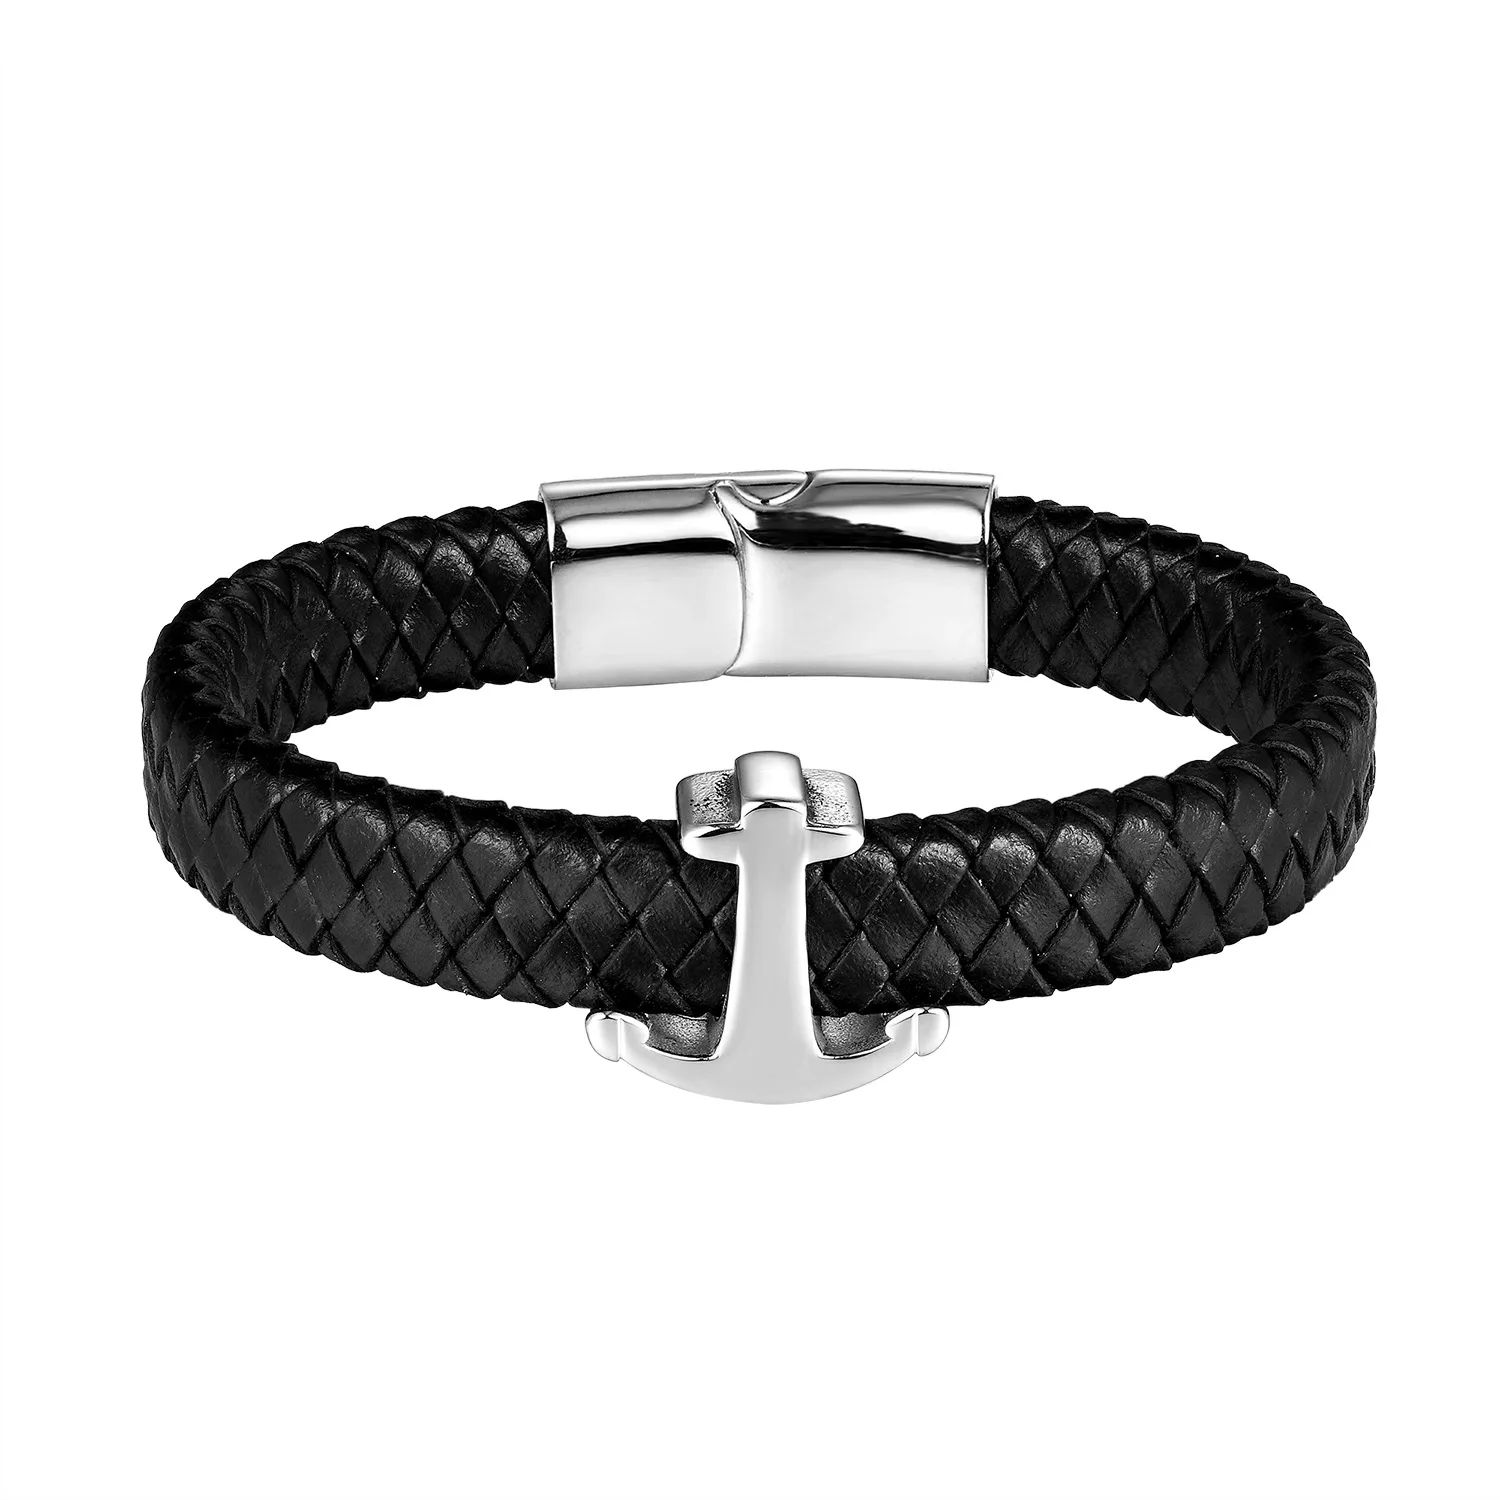 

MECYLIFE Custom Engrave Leather Bracelet Stainless Steel Anchor Charms Genuine Leather Bracelet for MEN, Black